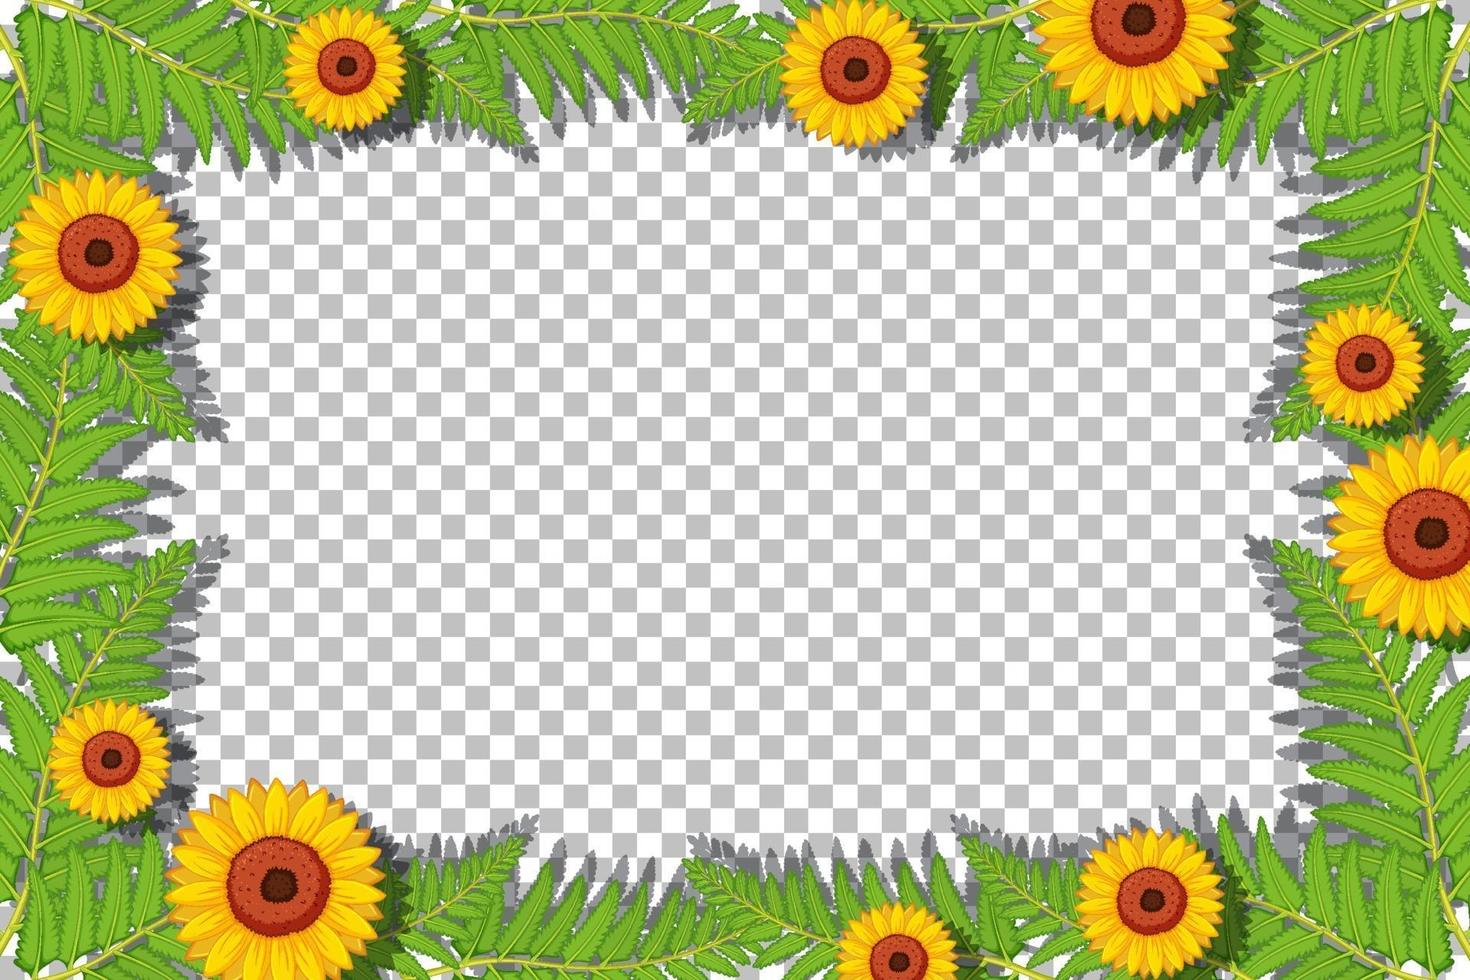 Sunflower frame template vector